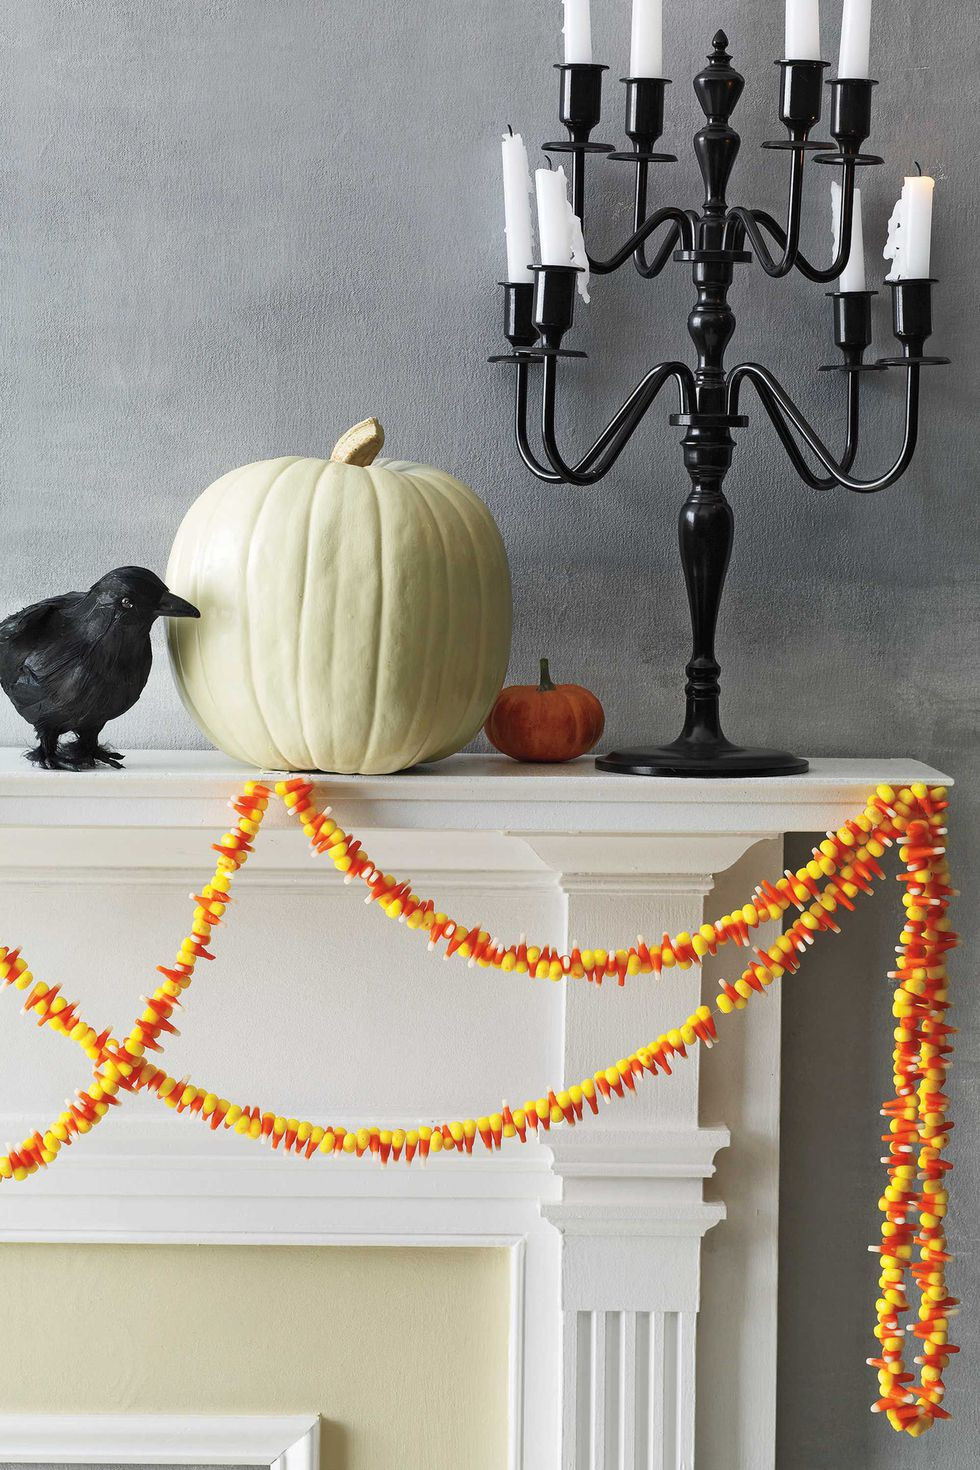 DIY Halloween Home Decor
 15 Adorable DIY Halloween Decor Ideas To Add To Your